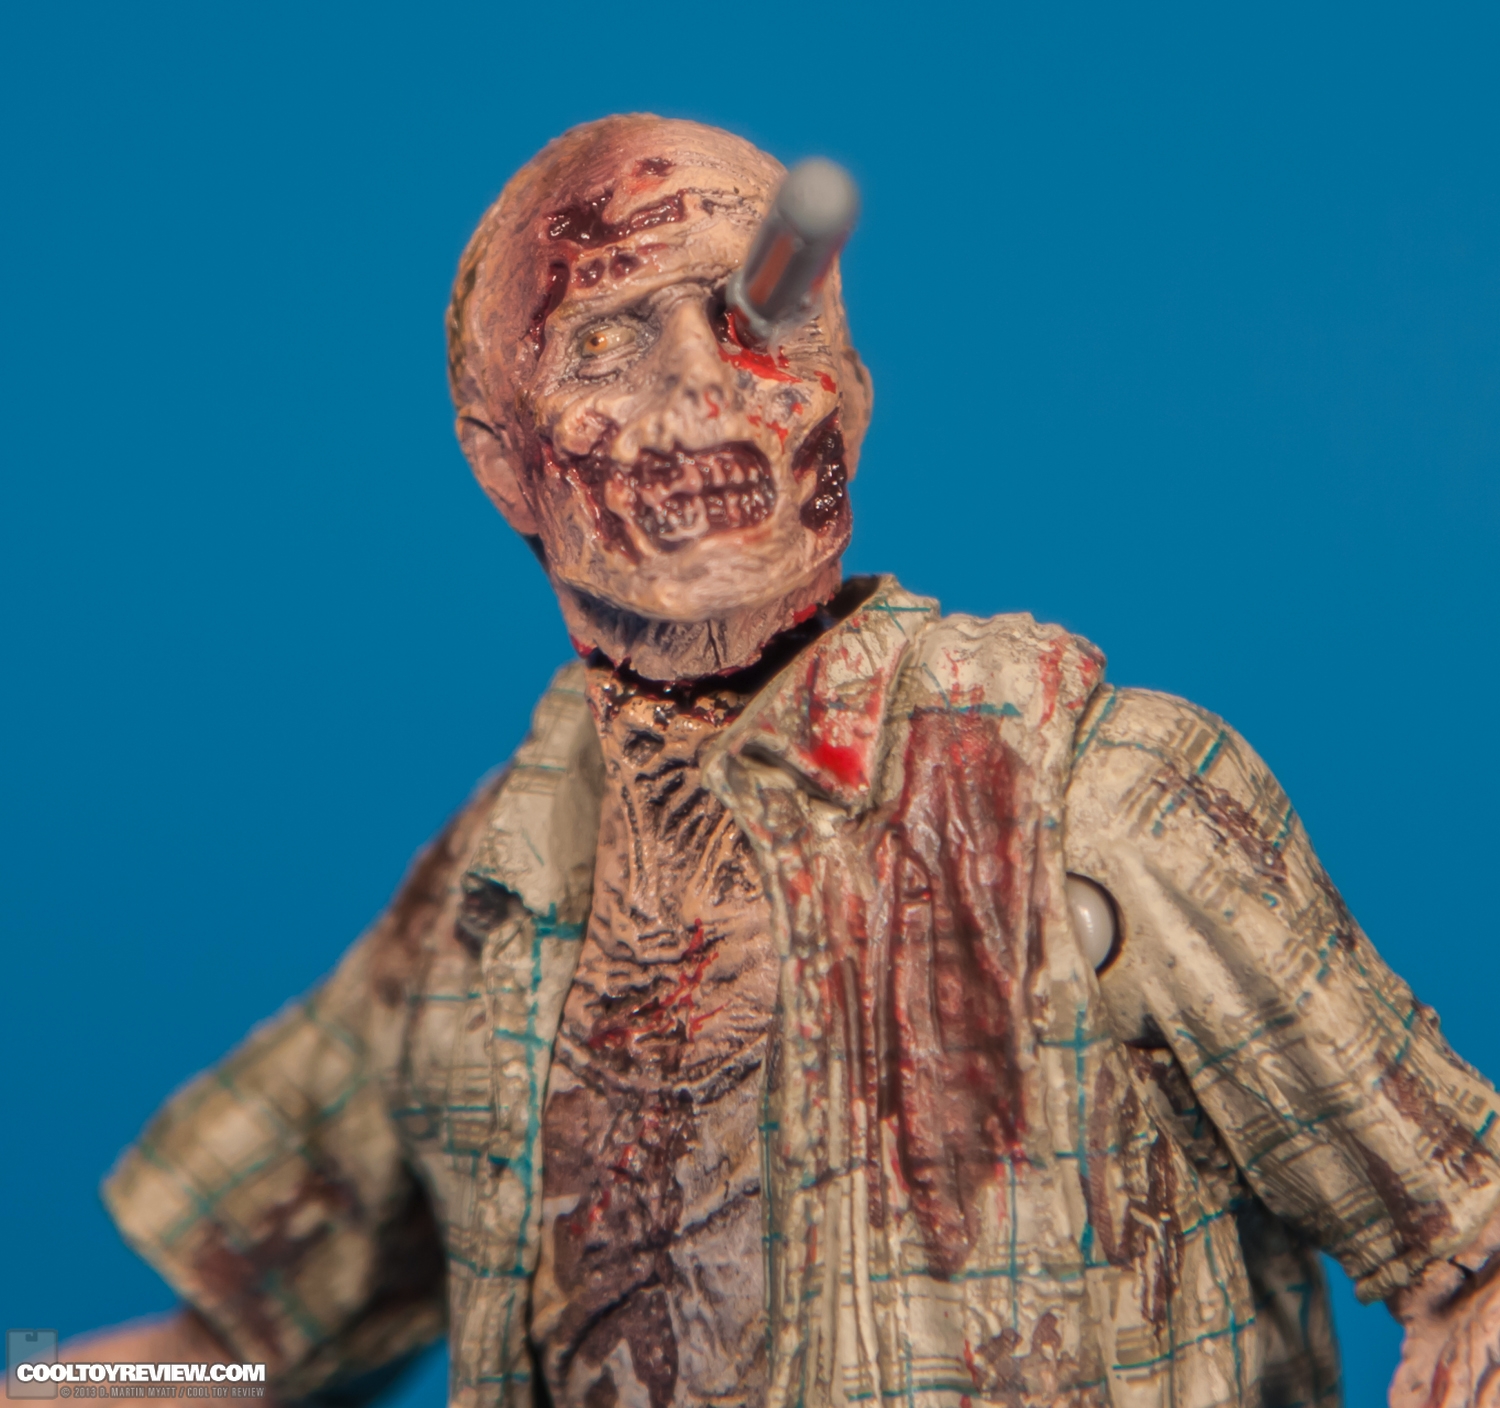 RV_Zombie_Walking_Dead_TV_Series_2_McFarlane_Toys-05.jpg